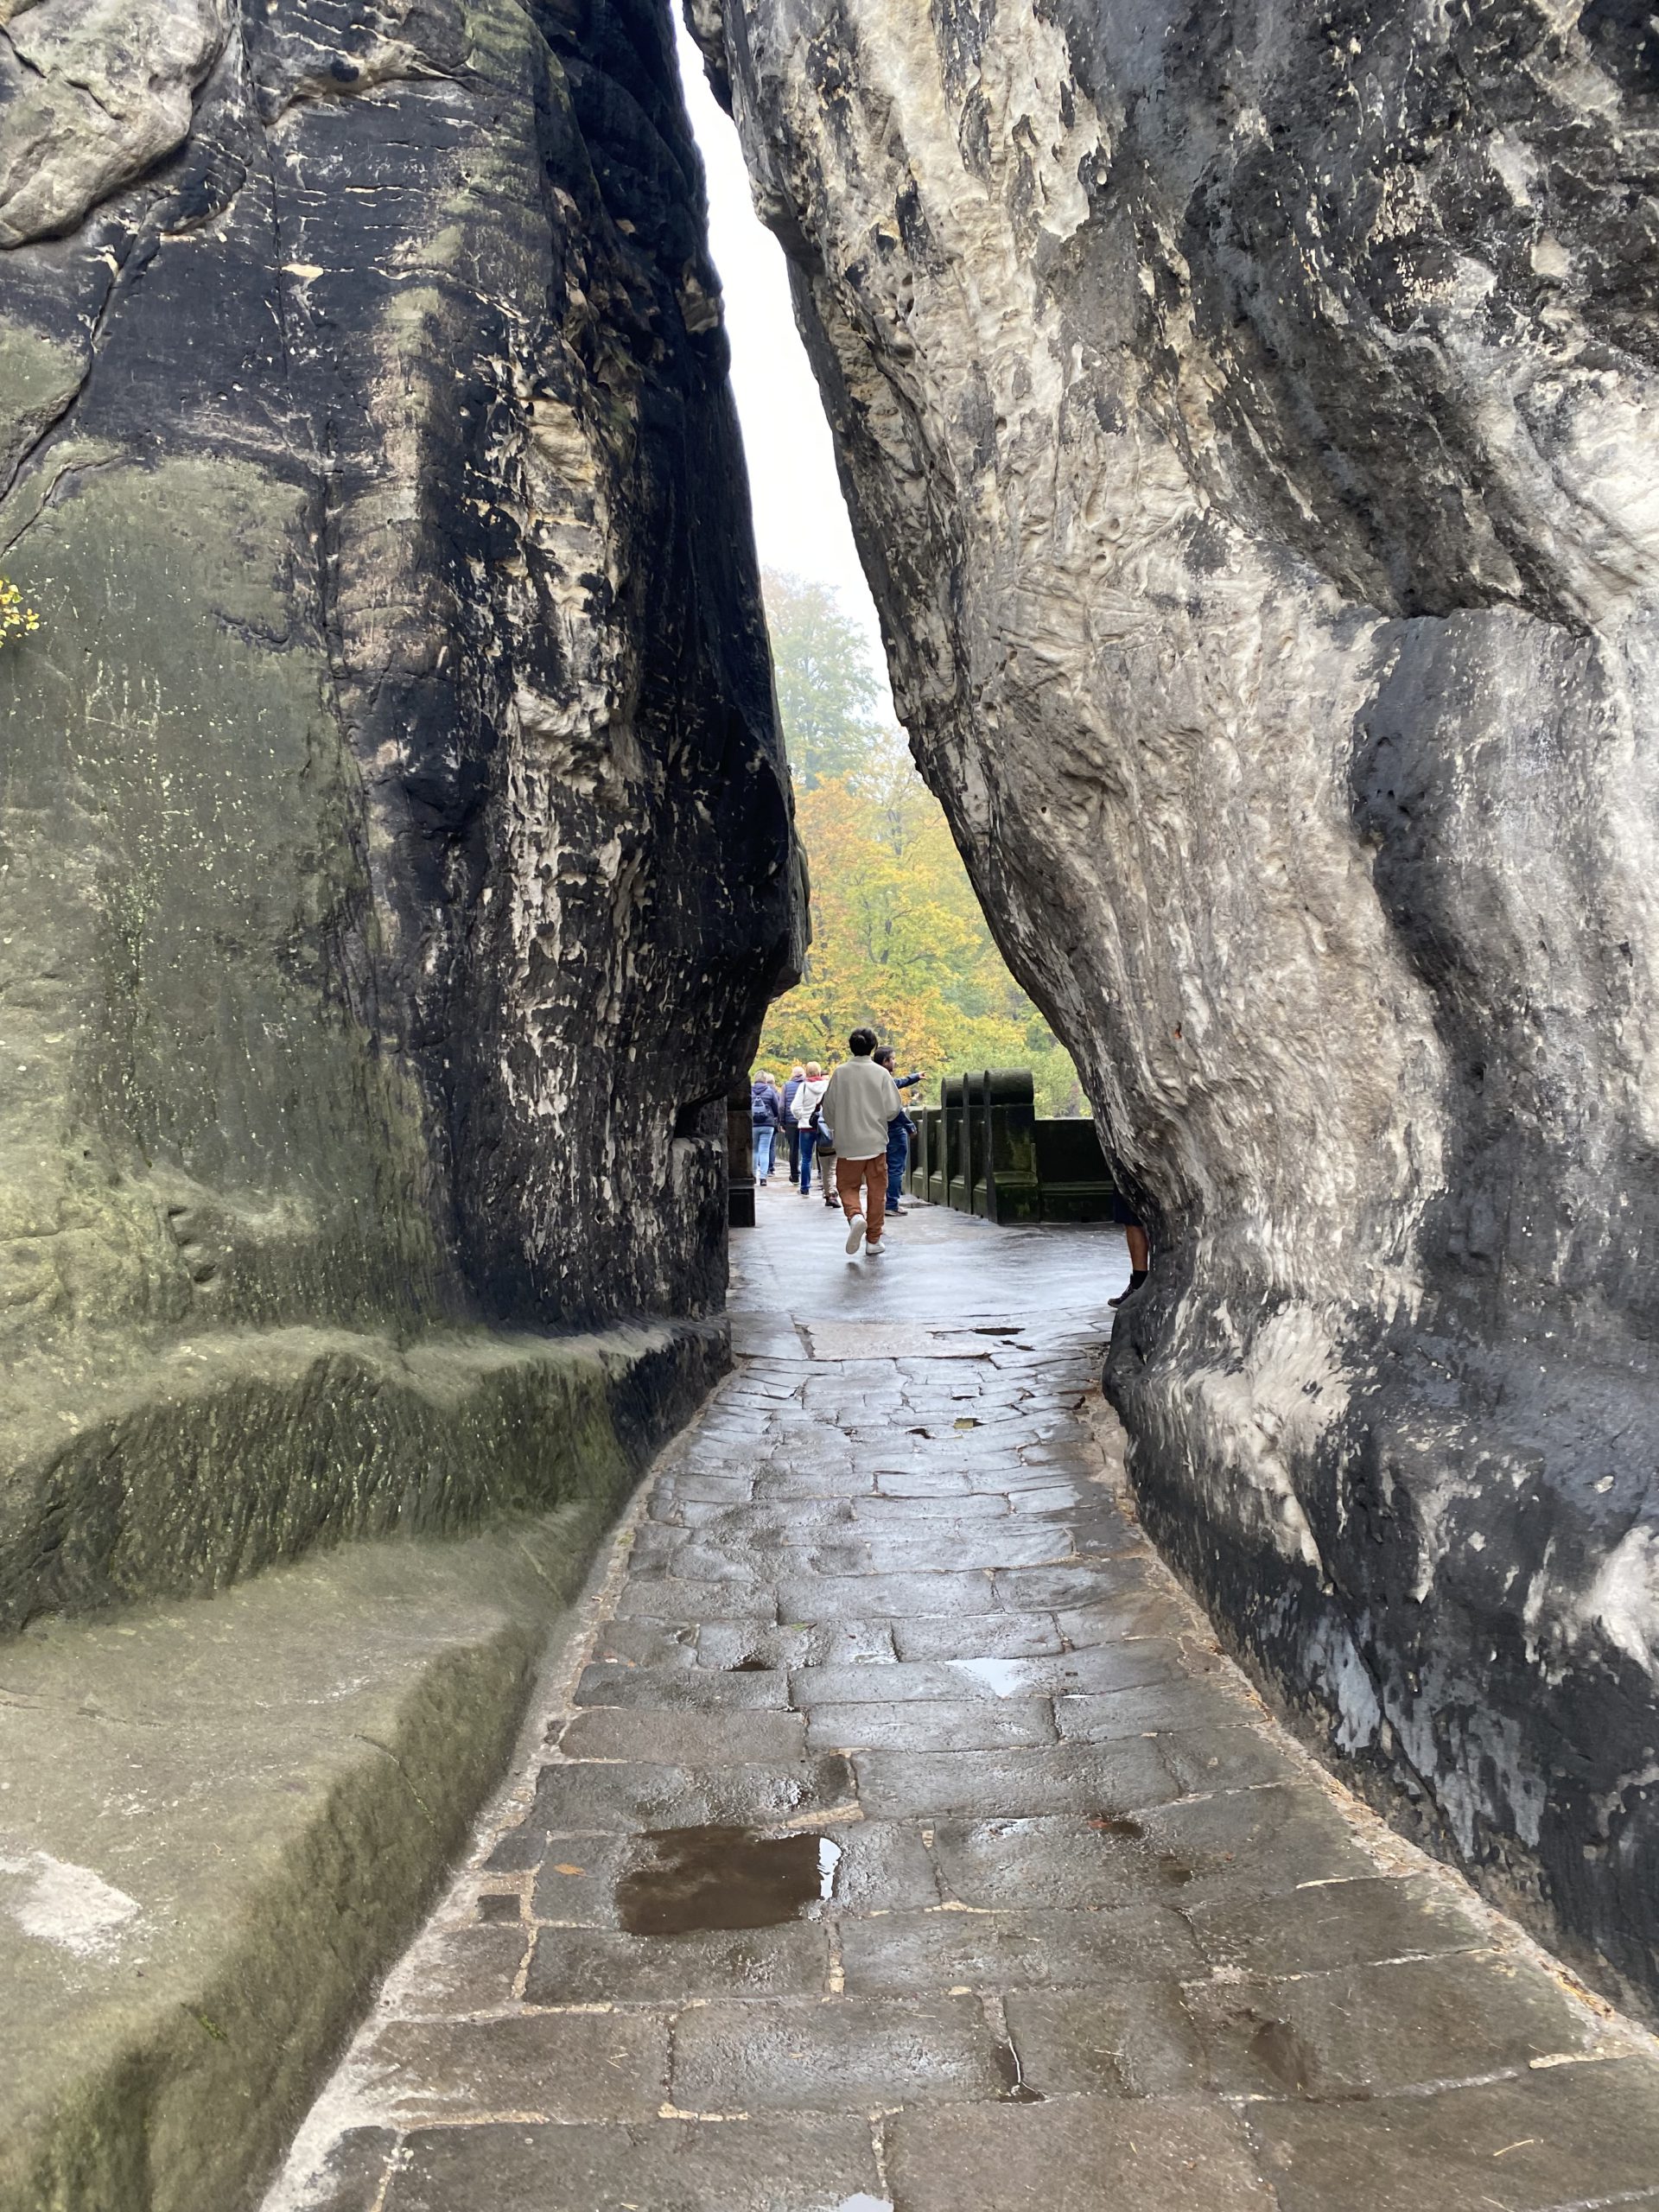 A glimpse of the Bastei Bridge